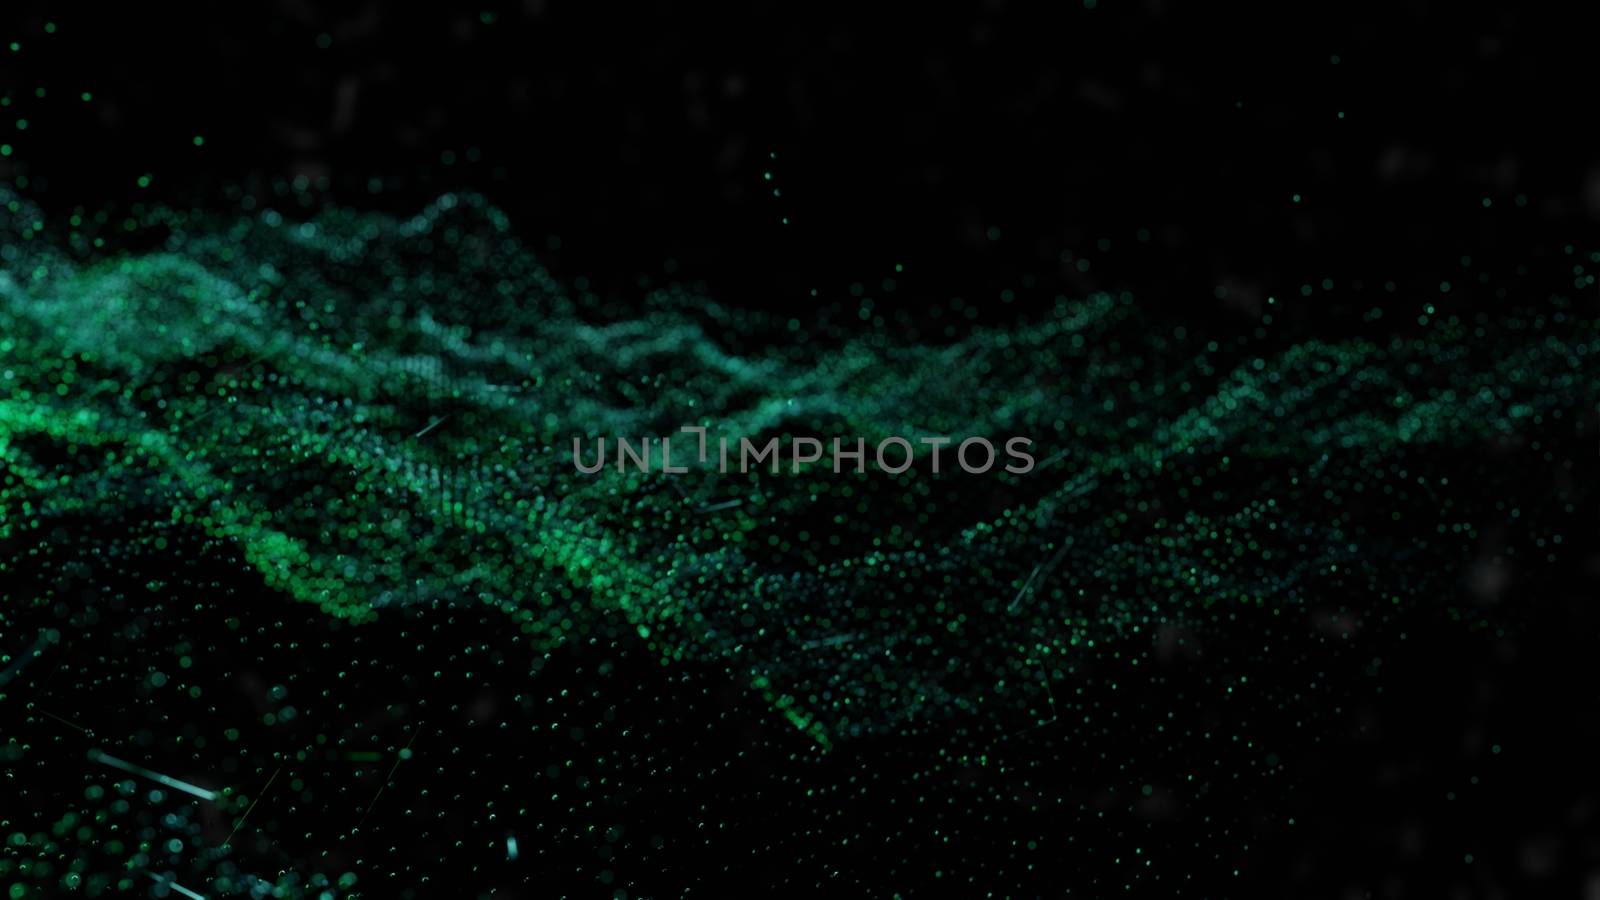 Plexus of abstract glow dots by cherezoff